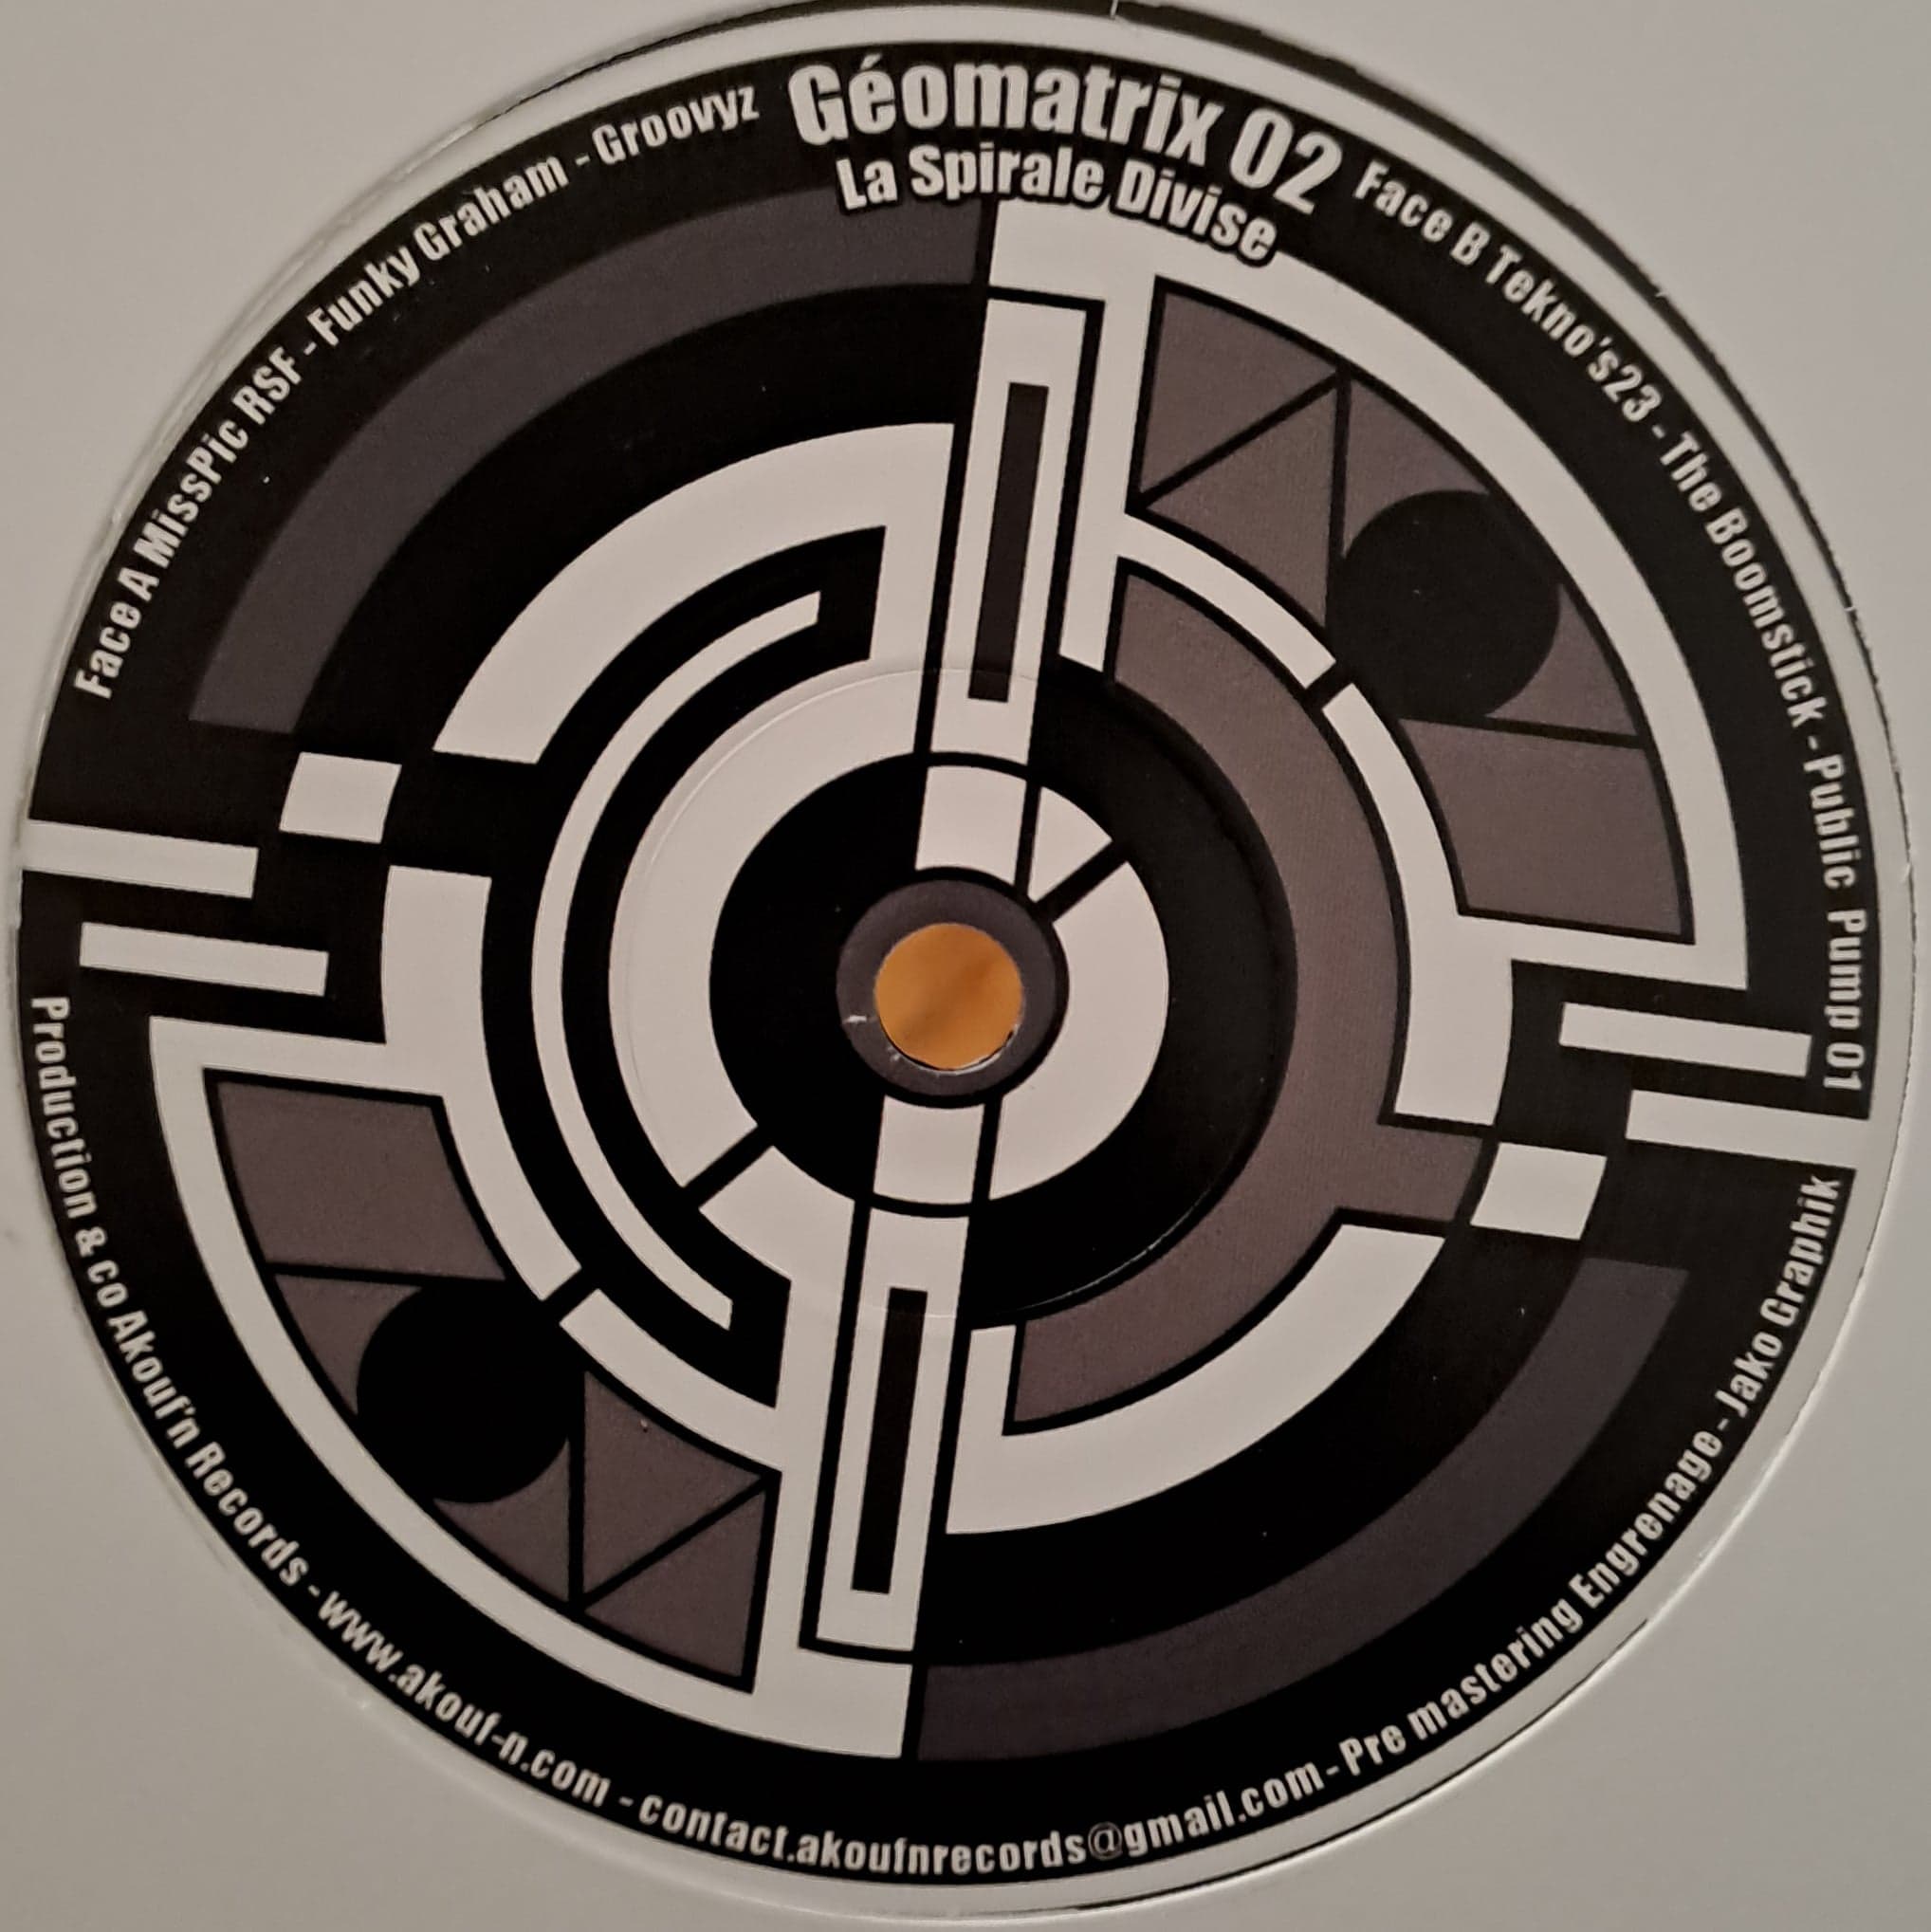 Géomatrix 02 RP - vinyle freetekno